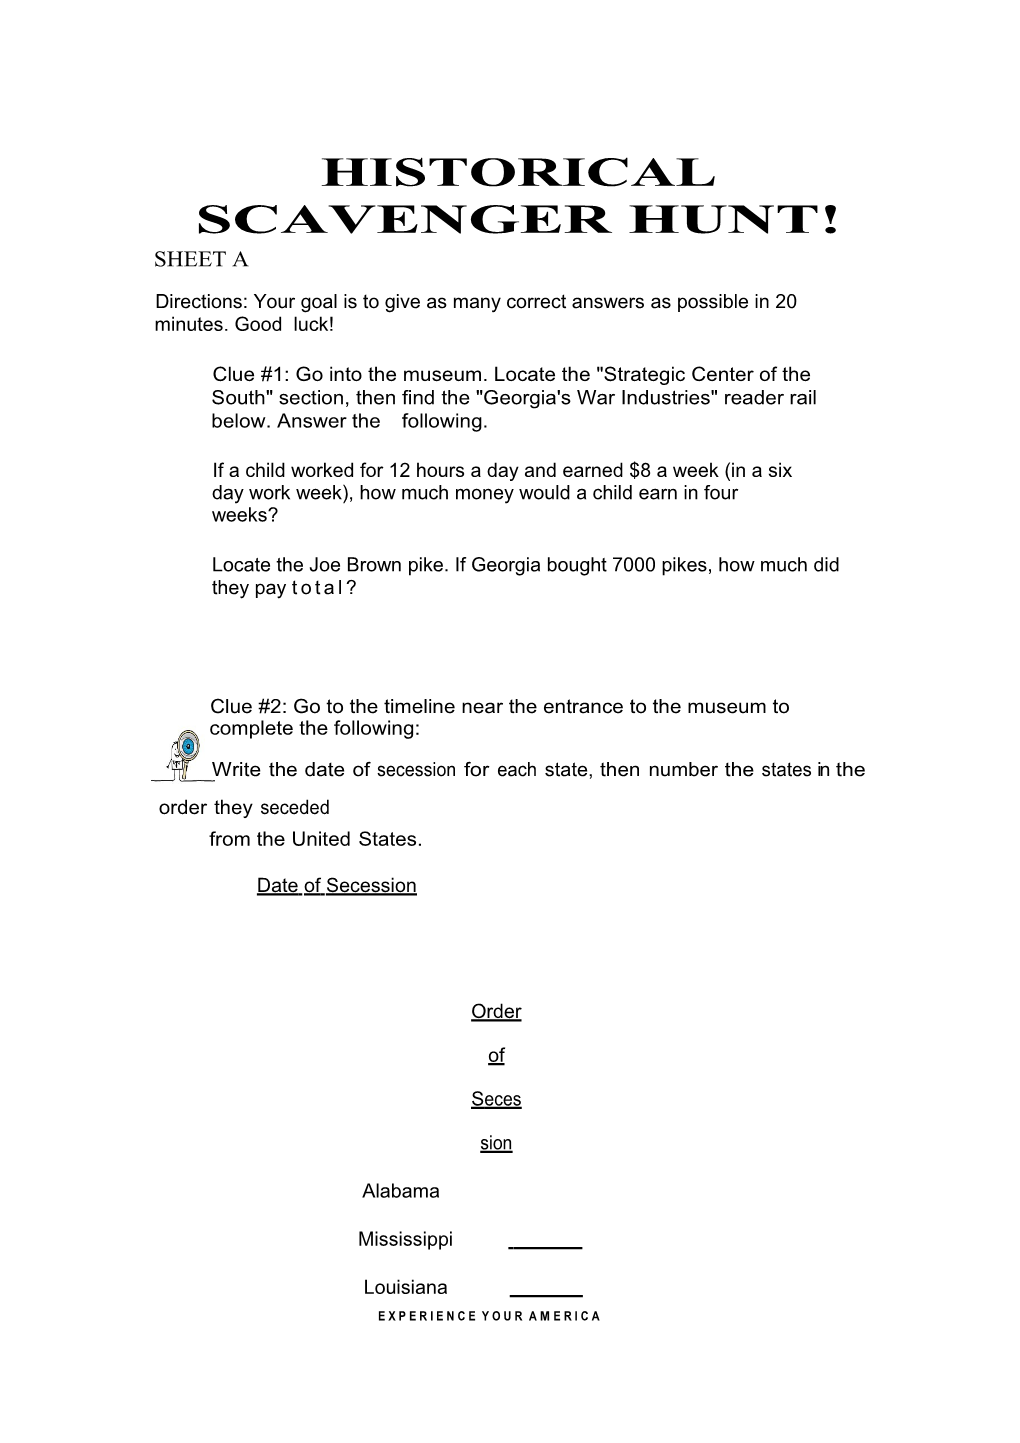 Historical Scavenger Hunt!